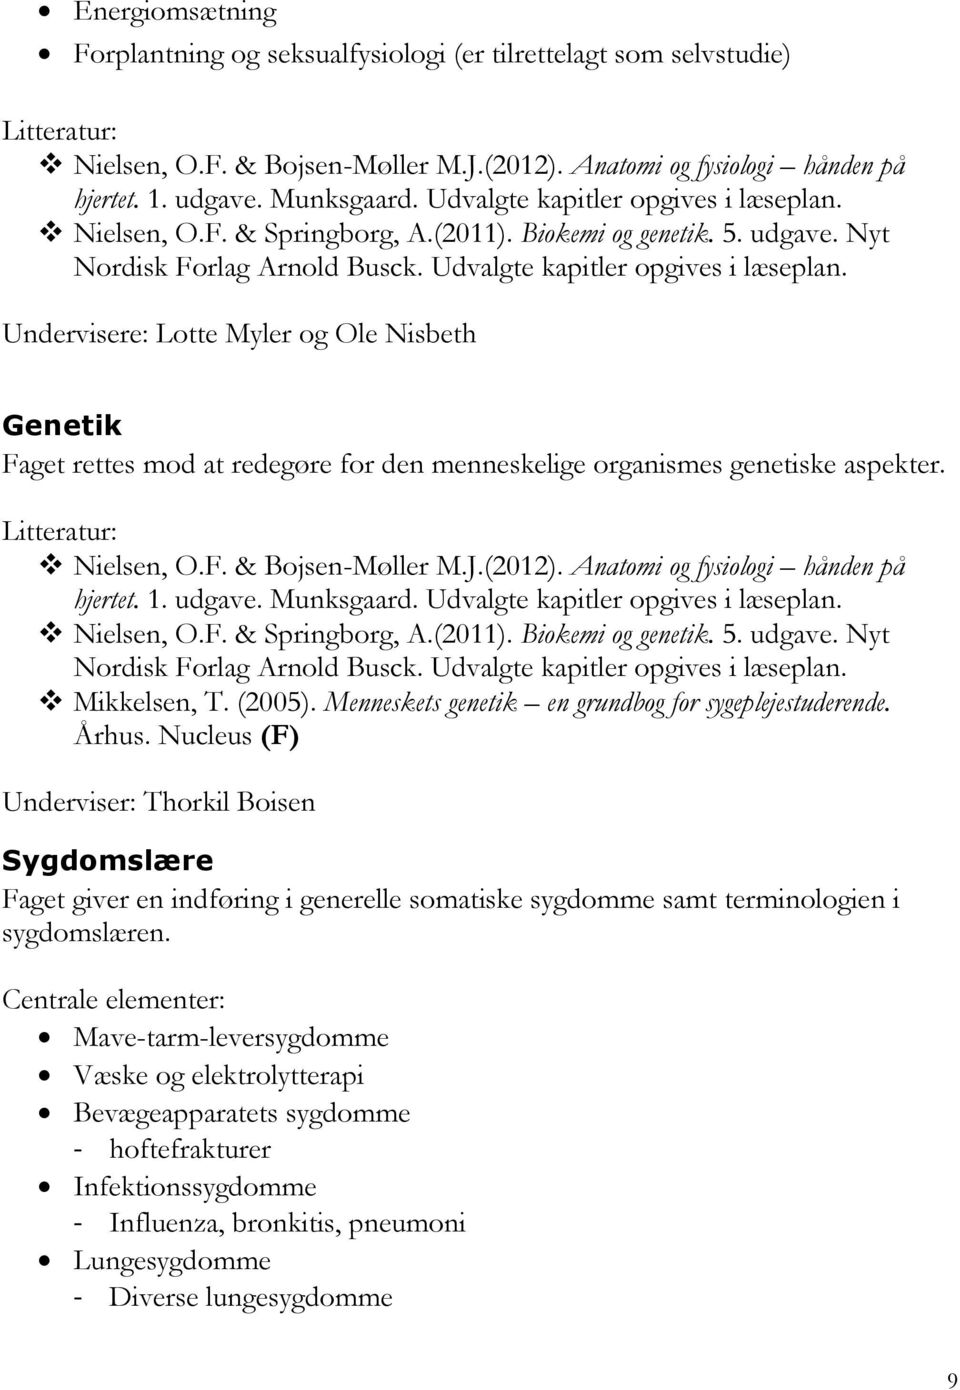 Undervisere: Lotte Myler og Ole Nisbeth Genetik Faget rettes mod at redegøre for den menneskelige organismes genetiske aspekter. Litteratur: Nielsen, O.F. & Bojsen-Møller M.J.(2012).